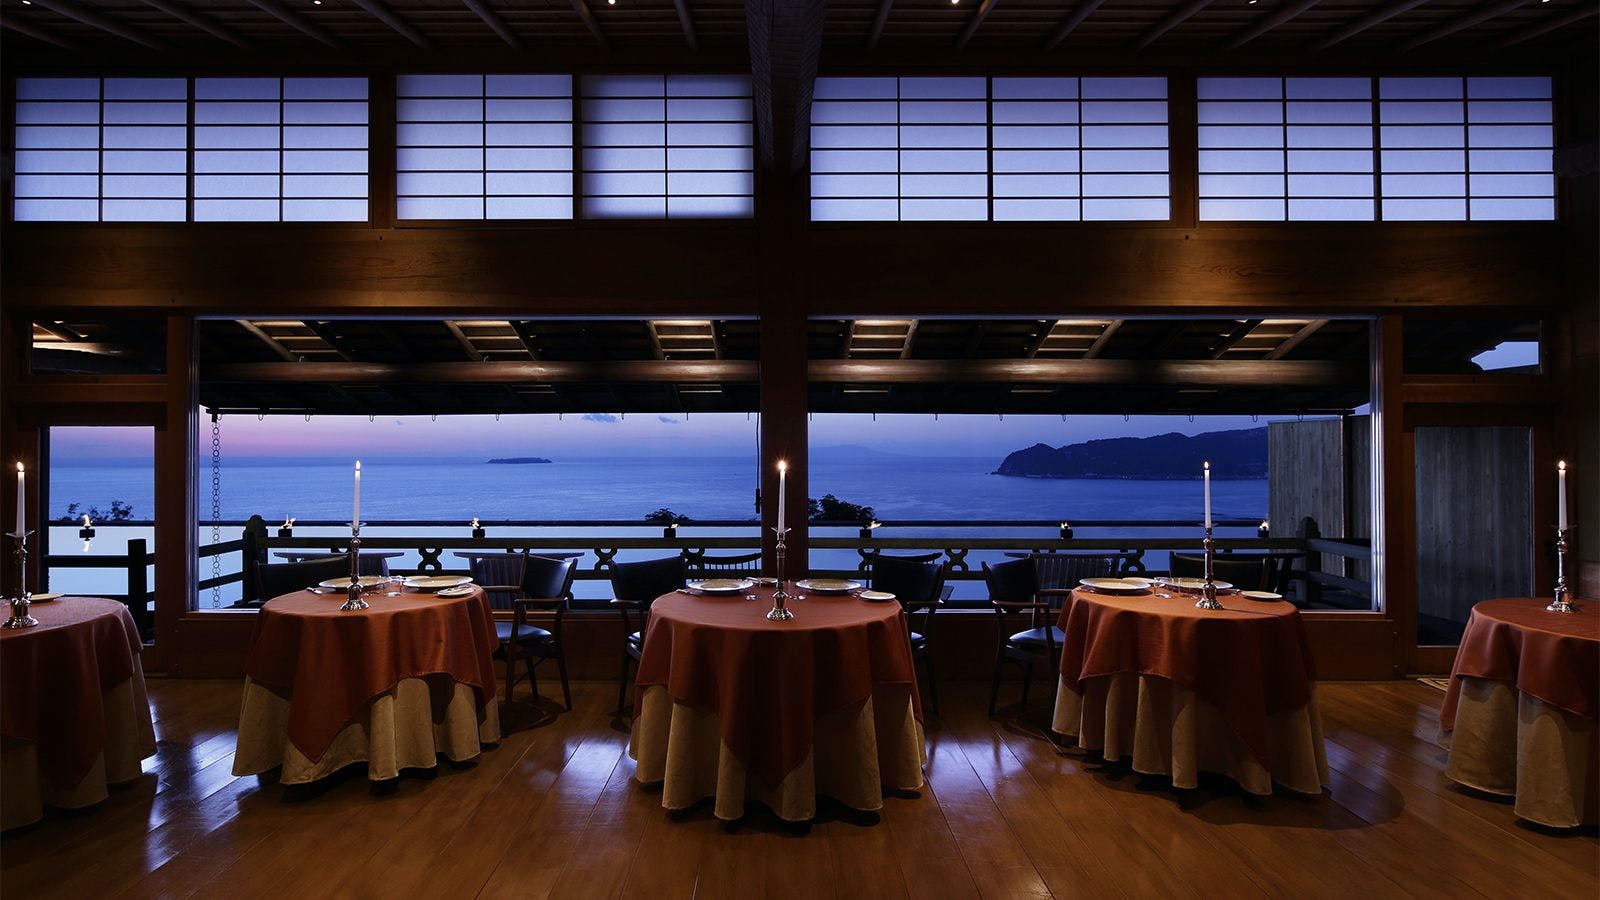 THE HIRAMATSU HOTELS & RESORTS 熱海